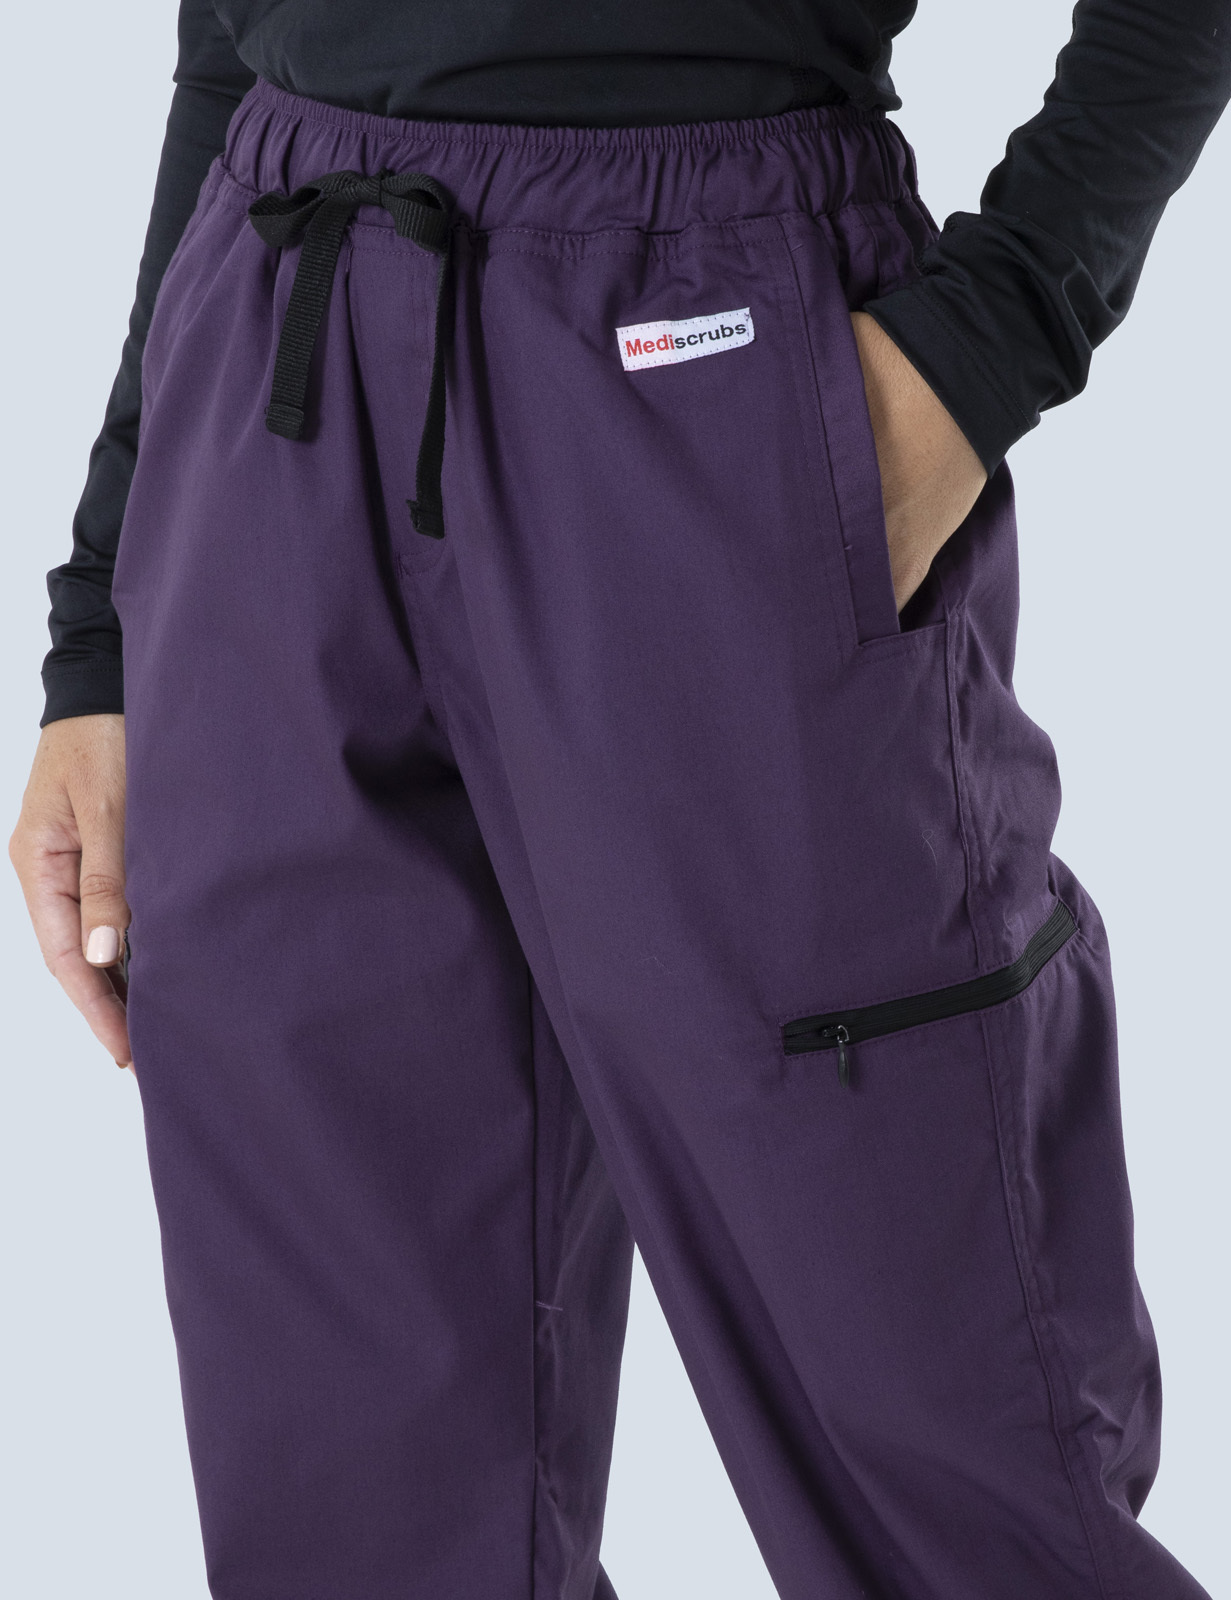 Women's Utility Pants - Aubergine - Large